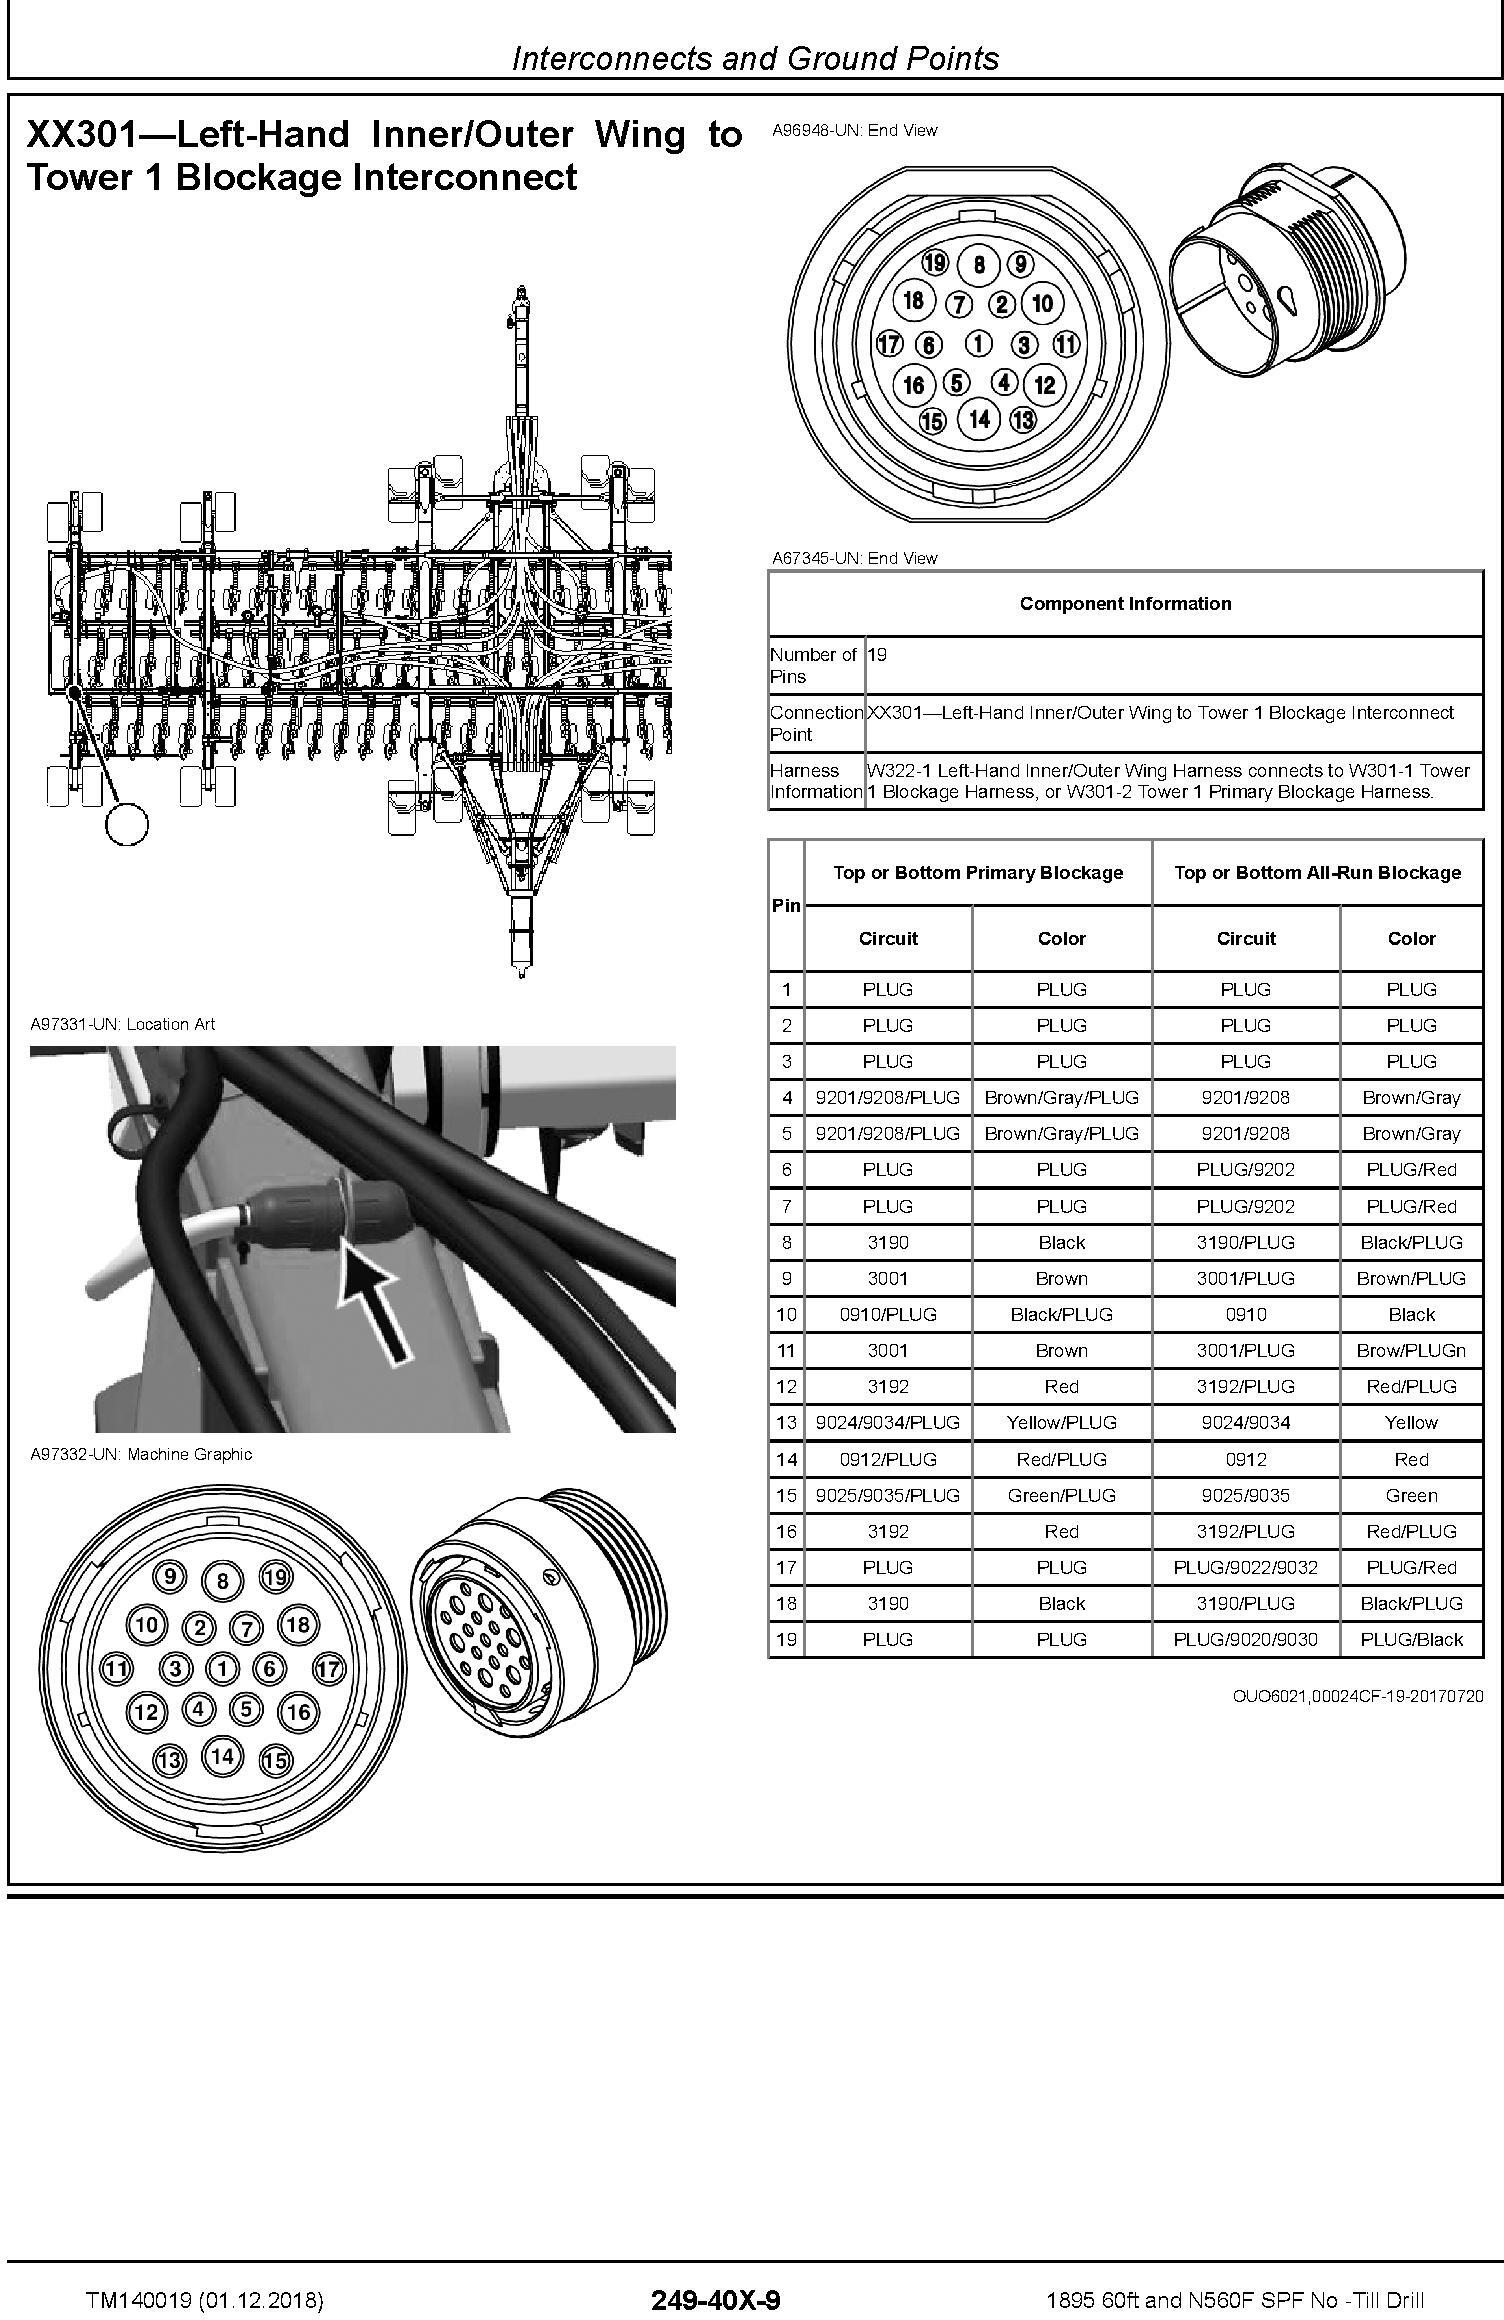 John Deere 1895 60ft and N560F SPF No -Till Drill Diagnostic Technical Service Manual (TM140019) - 1